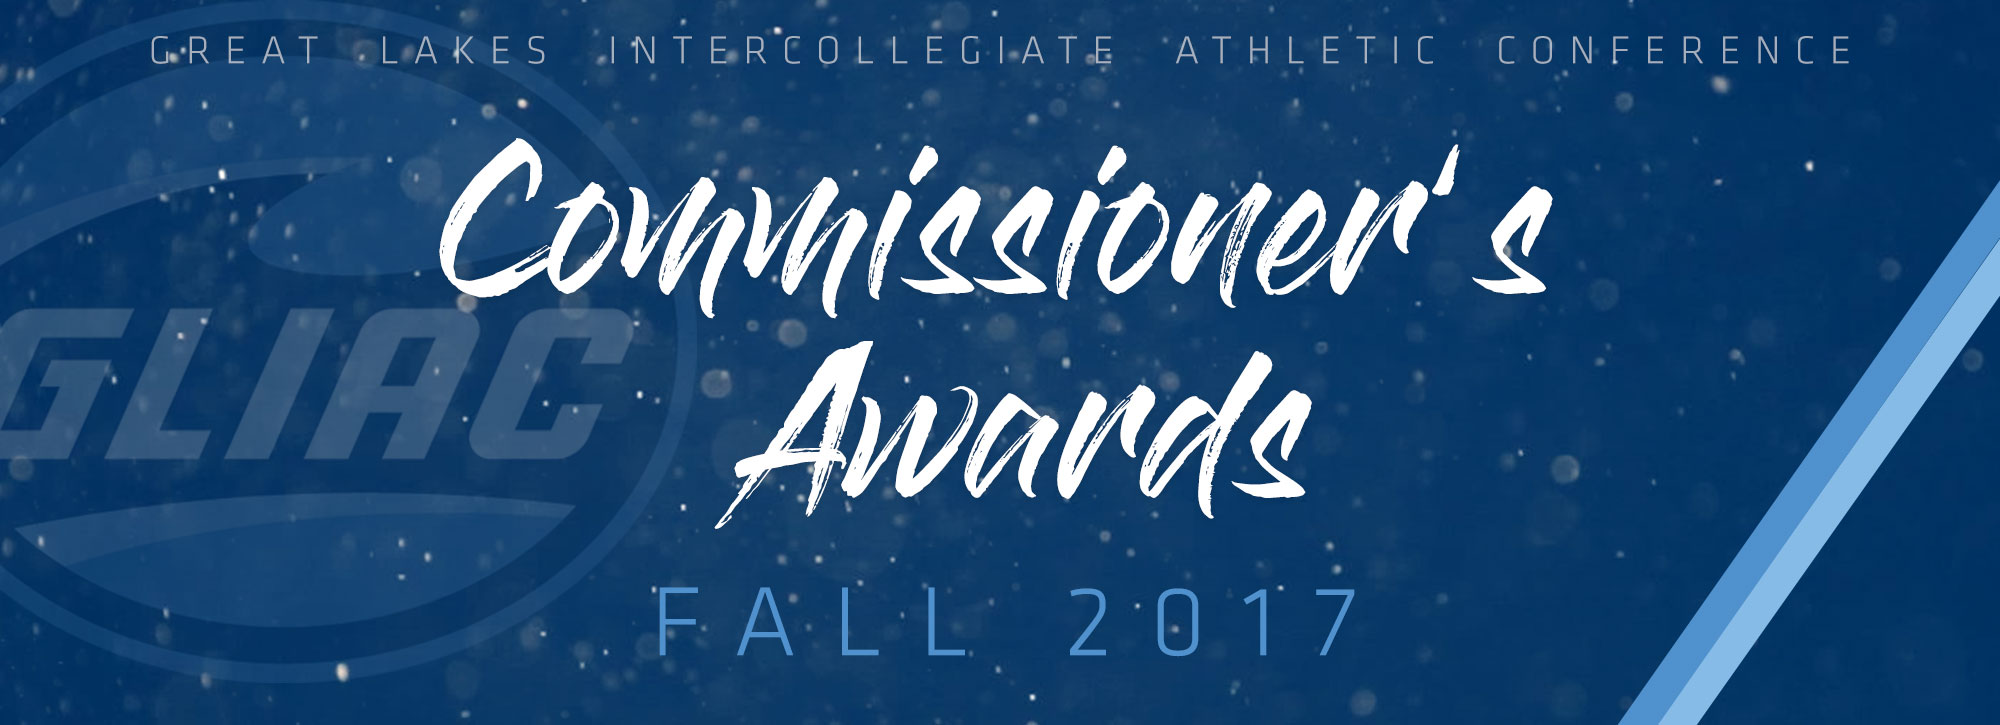 GLIAC Fall 2017 Commissioner's Award Recipients Announced